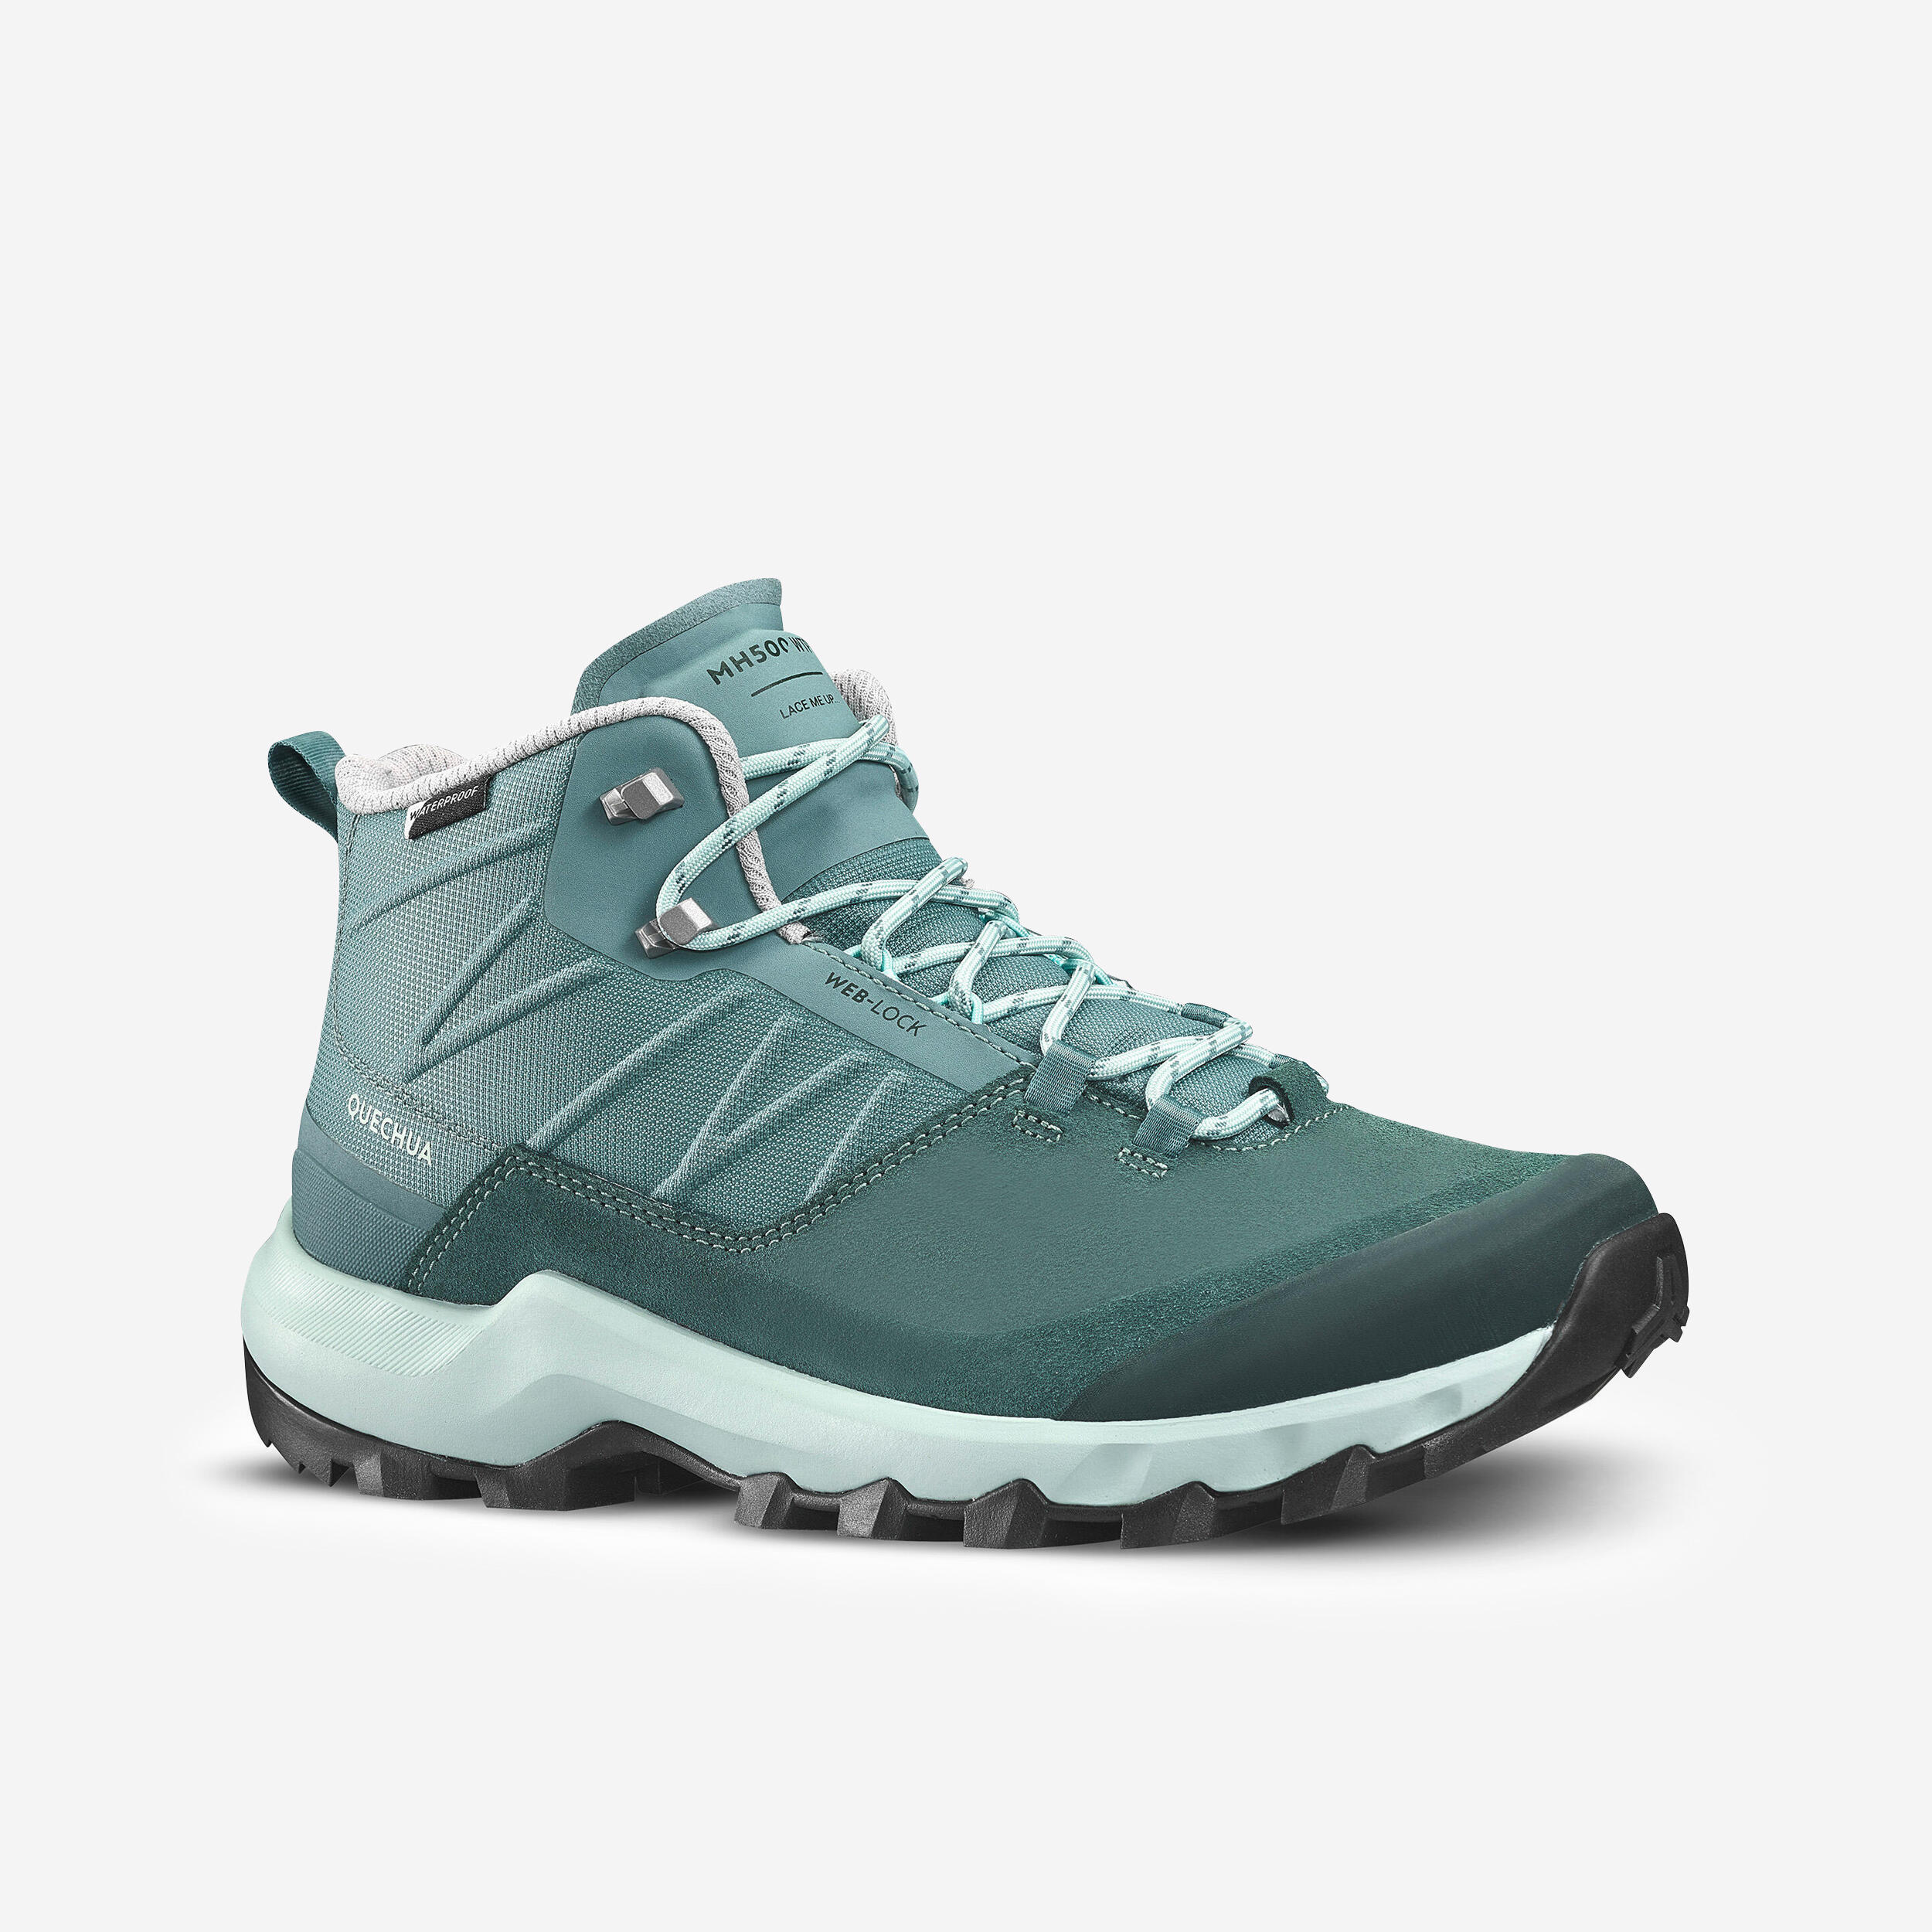 QUECHUA Women’s waterproof mountain walking boots - MH500 Mid - Green